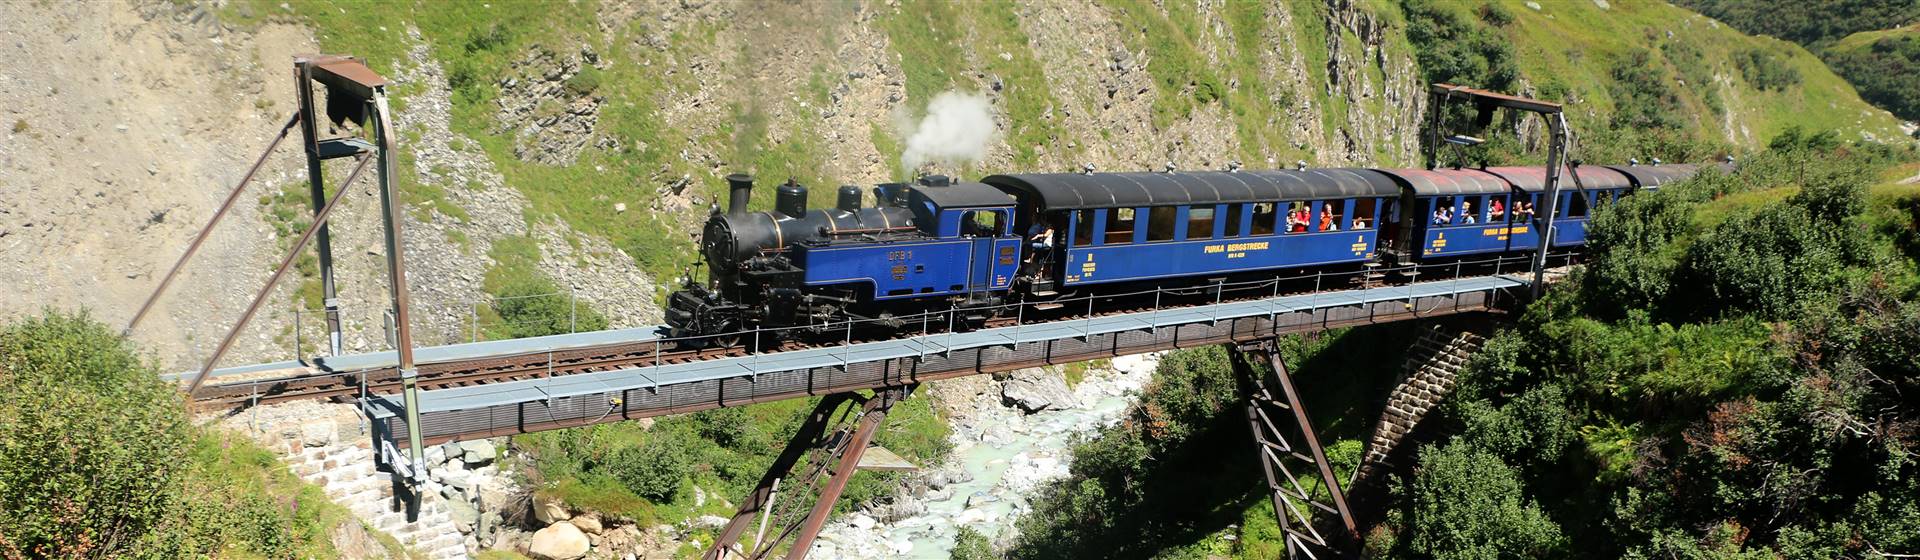 <img src="furkasteamrailway©dfb7_moser_1329.jpeg" alt="Furka Steam Railway"/>